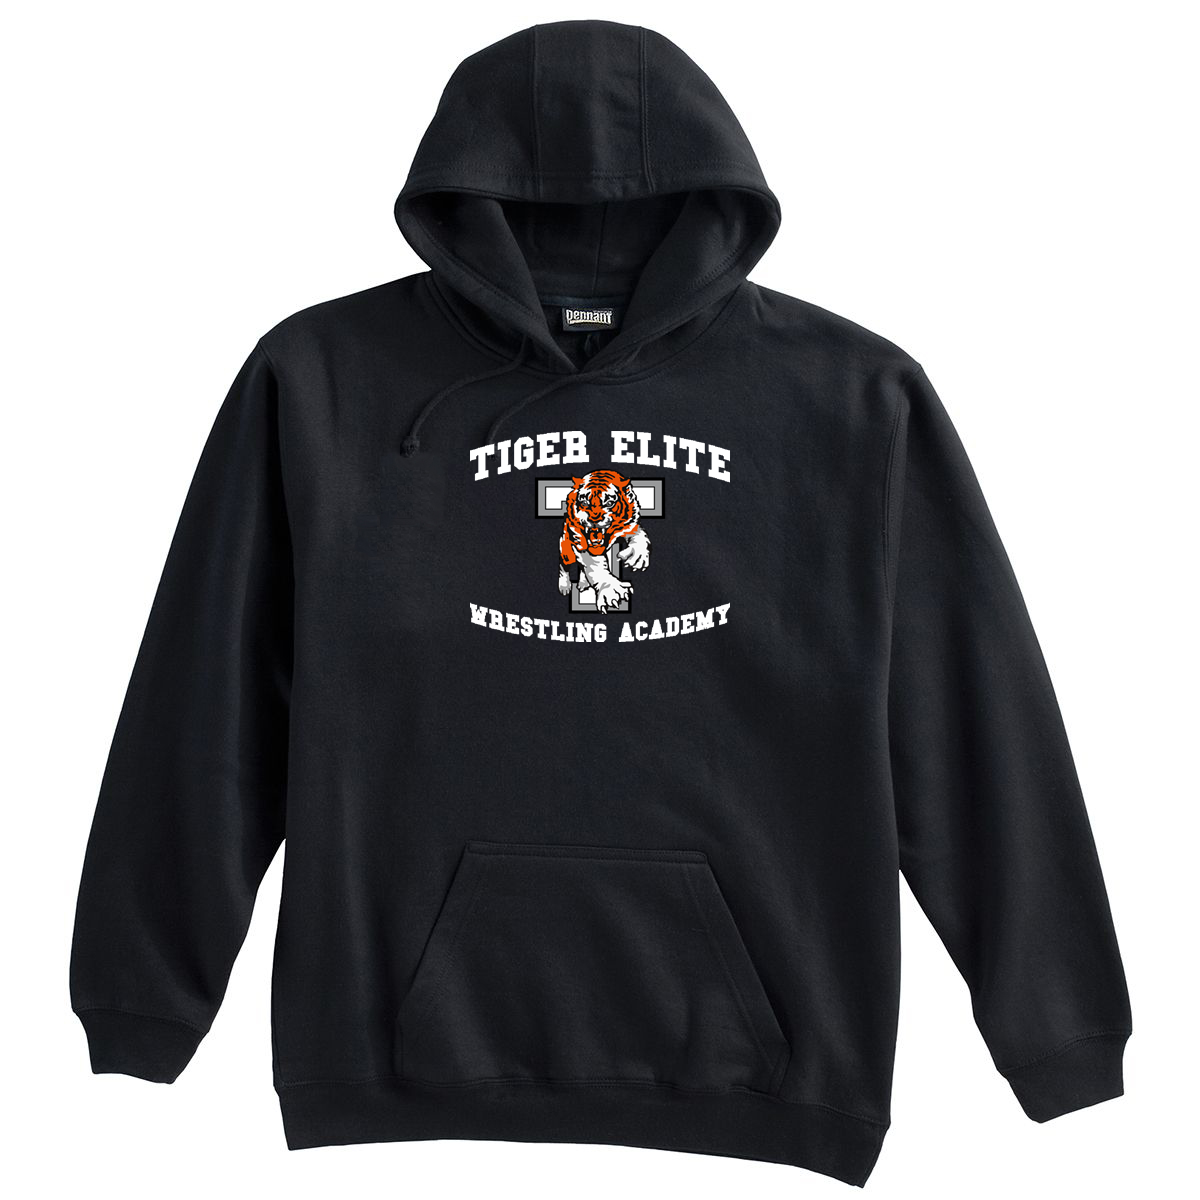 Tiger Elite Wrestling Academy  Sweatshirt